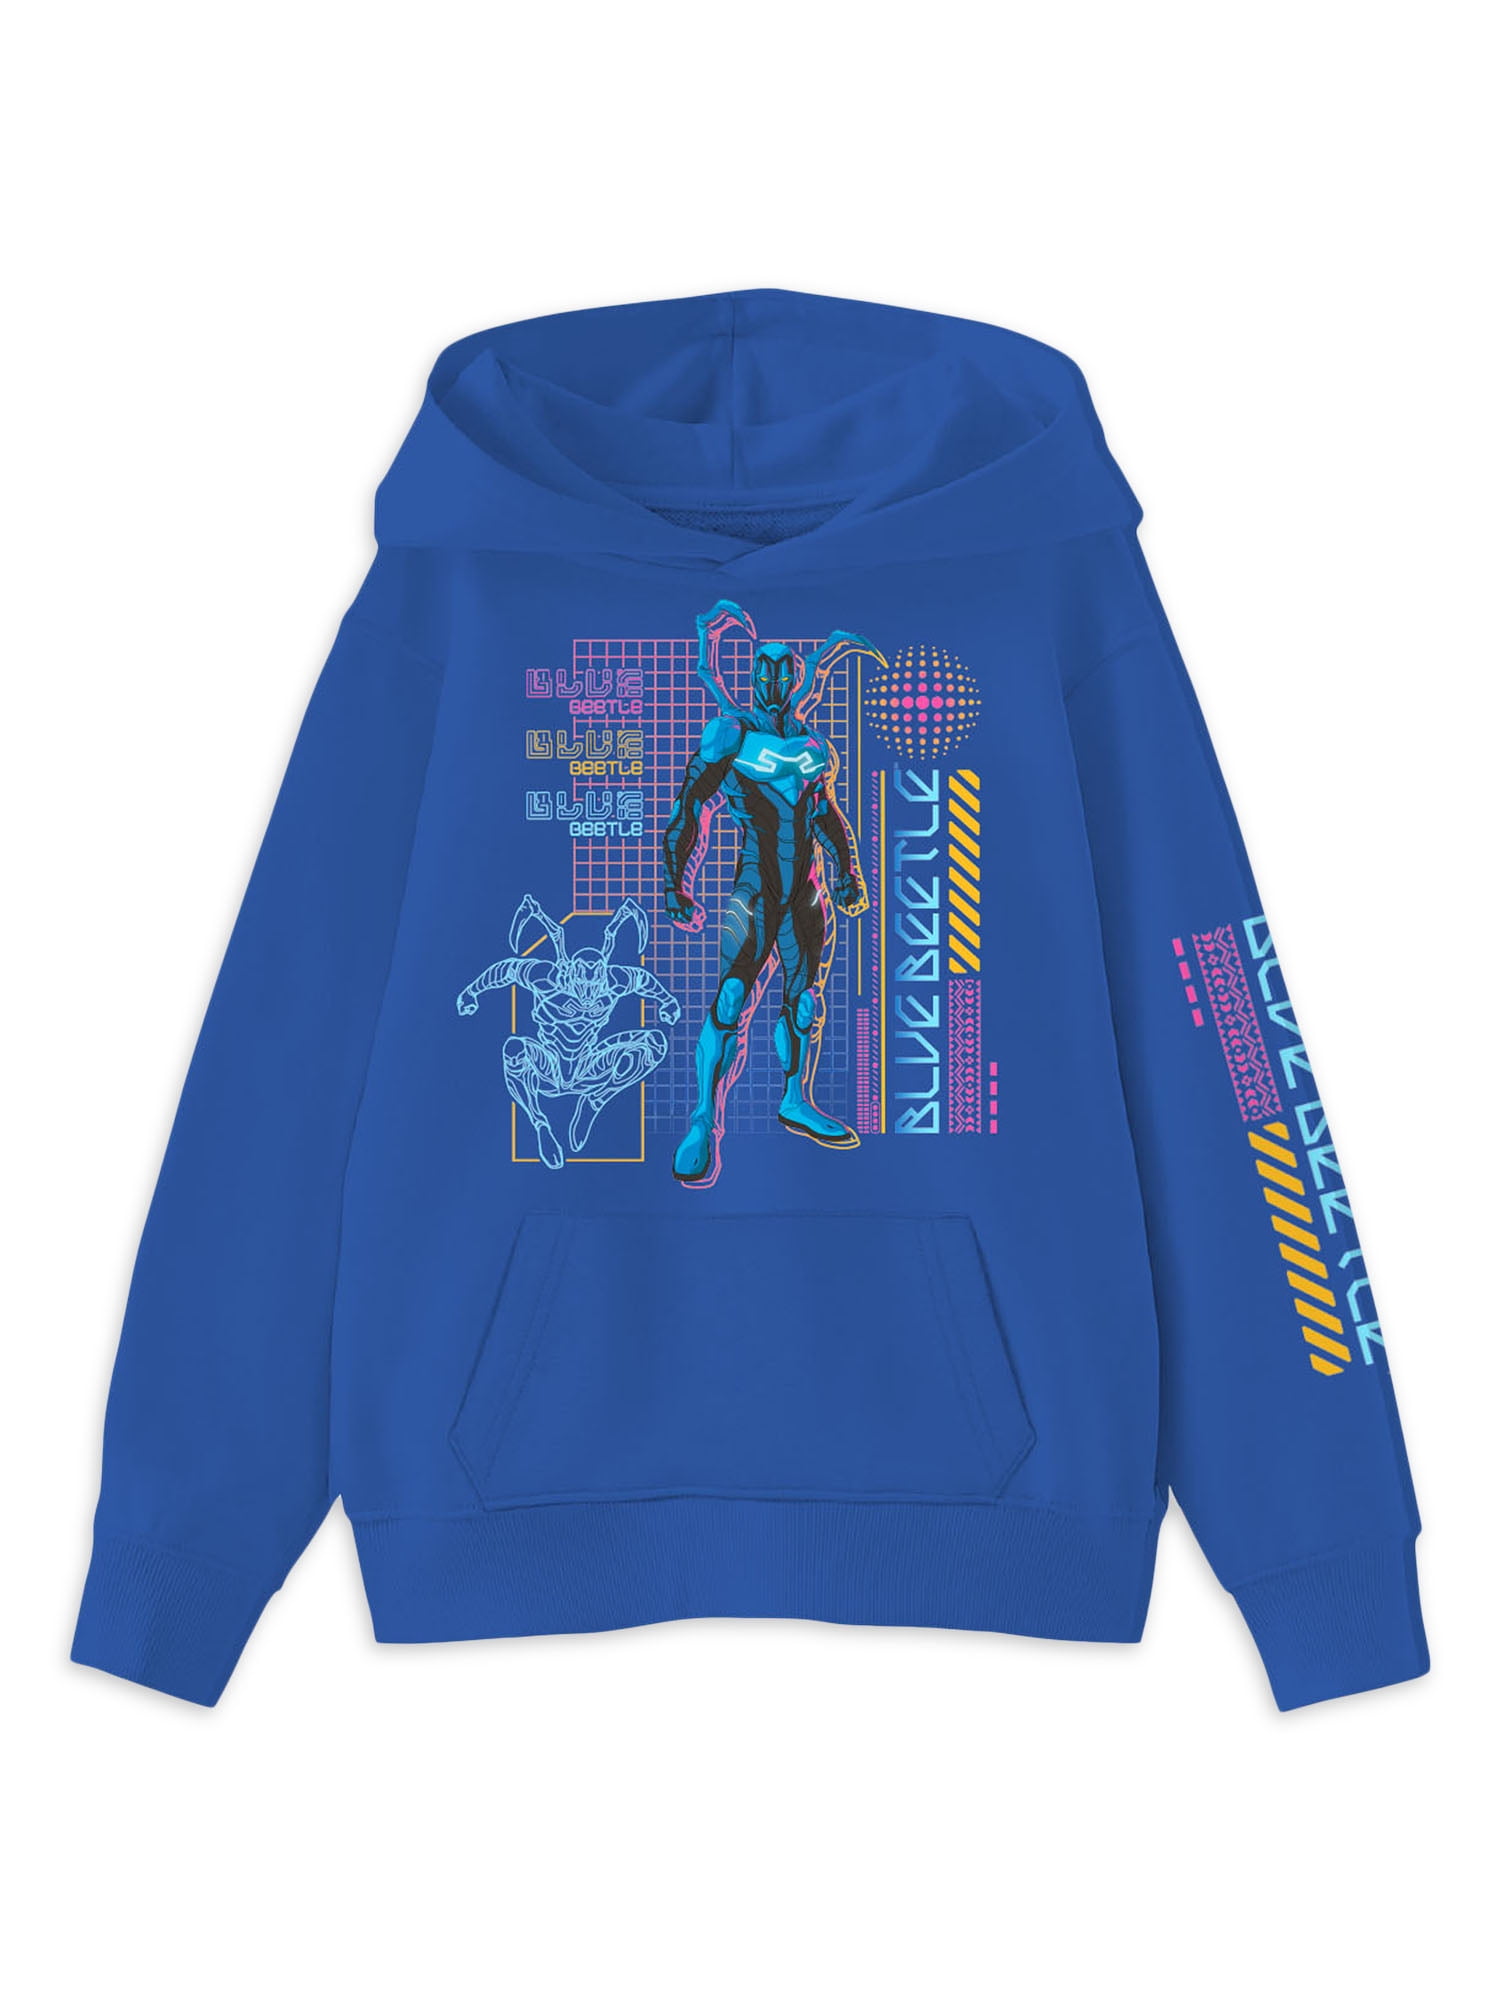 Blue Beetle Boys' Hyper Tech Hoodie Sweatshirt (Royal) $5 + Free Shipping w/ Walmart+ or on $35+